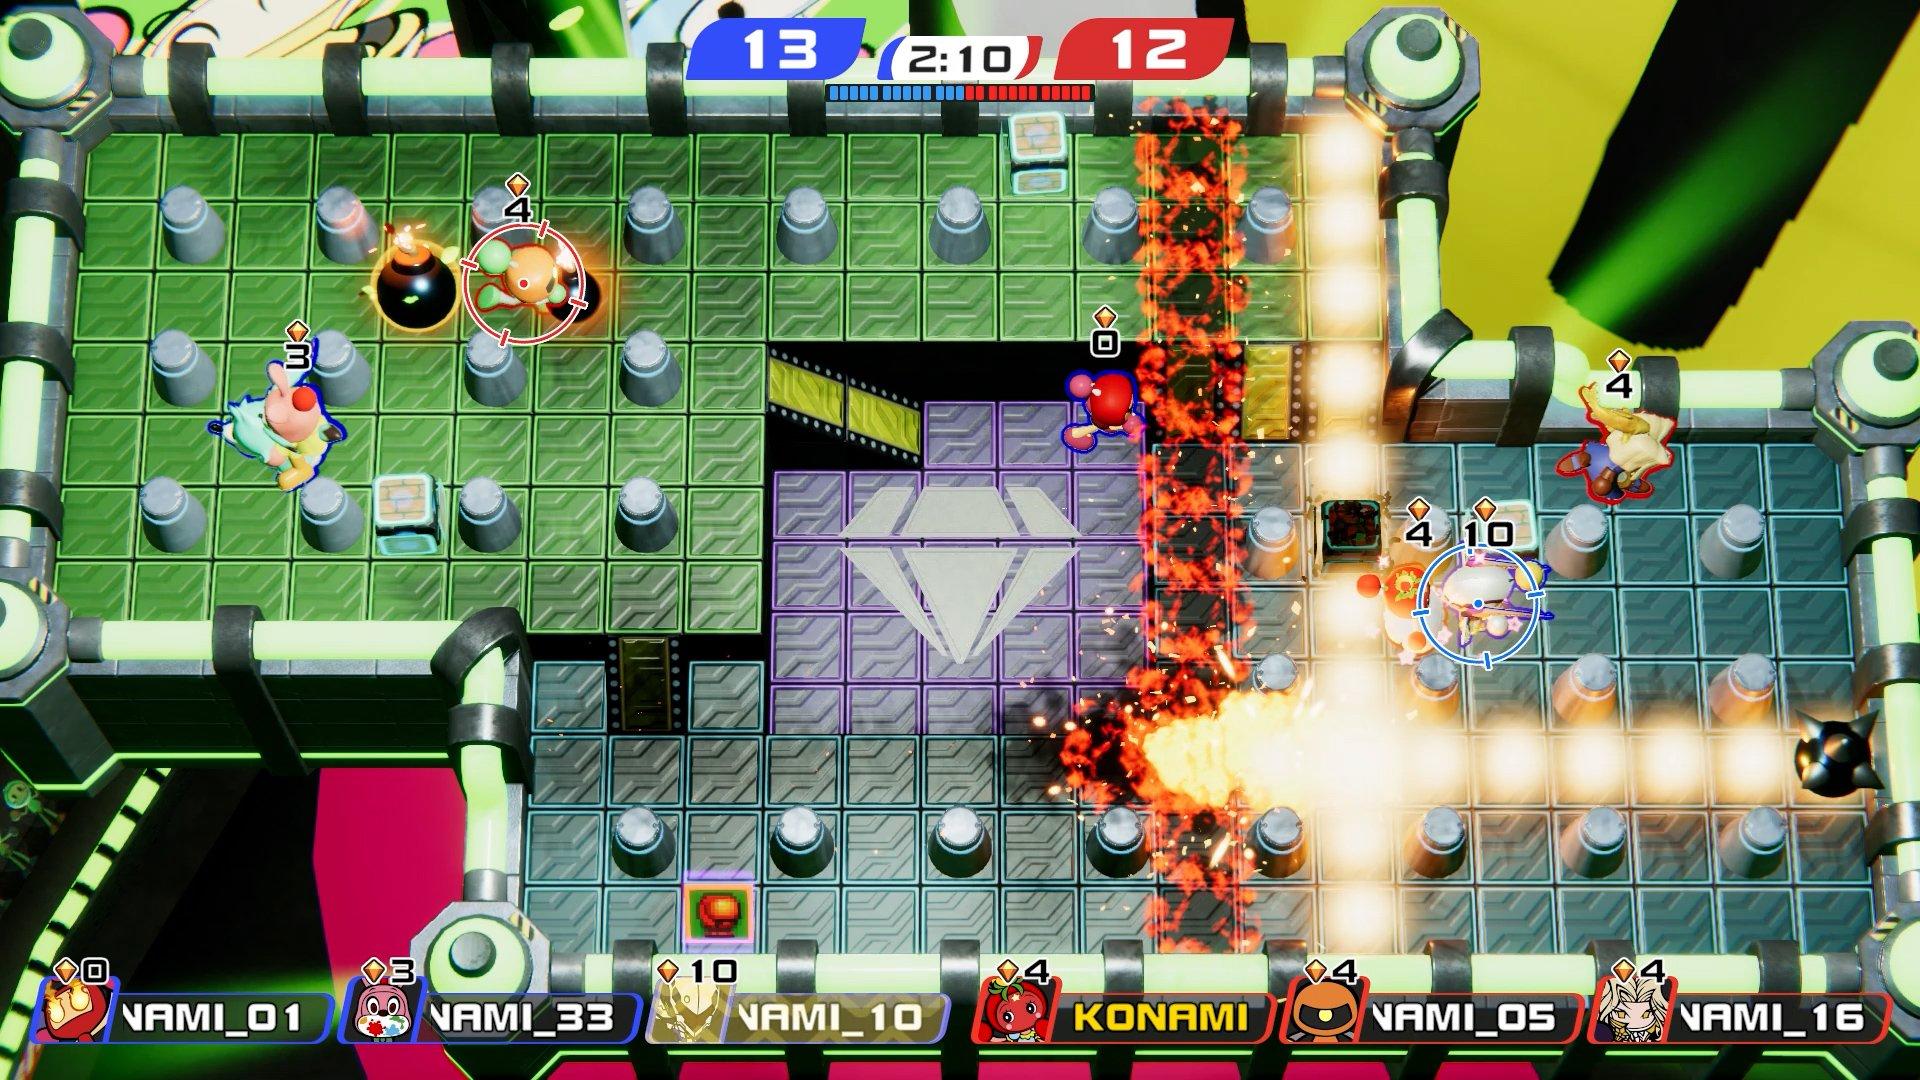 Super Bomberman R 2 - Nintendo Switch